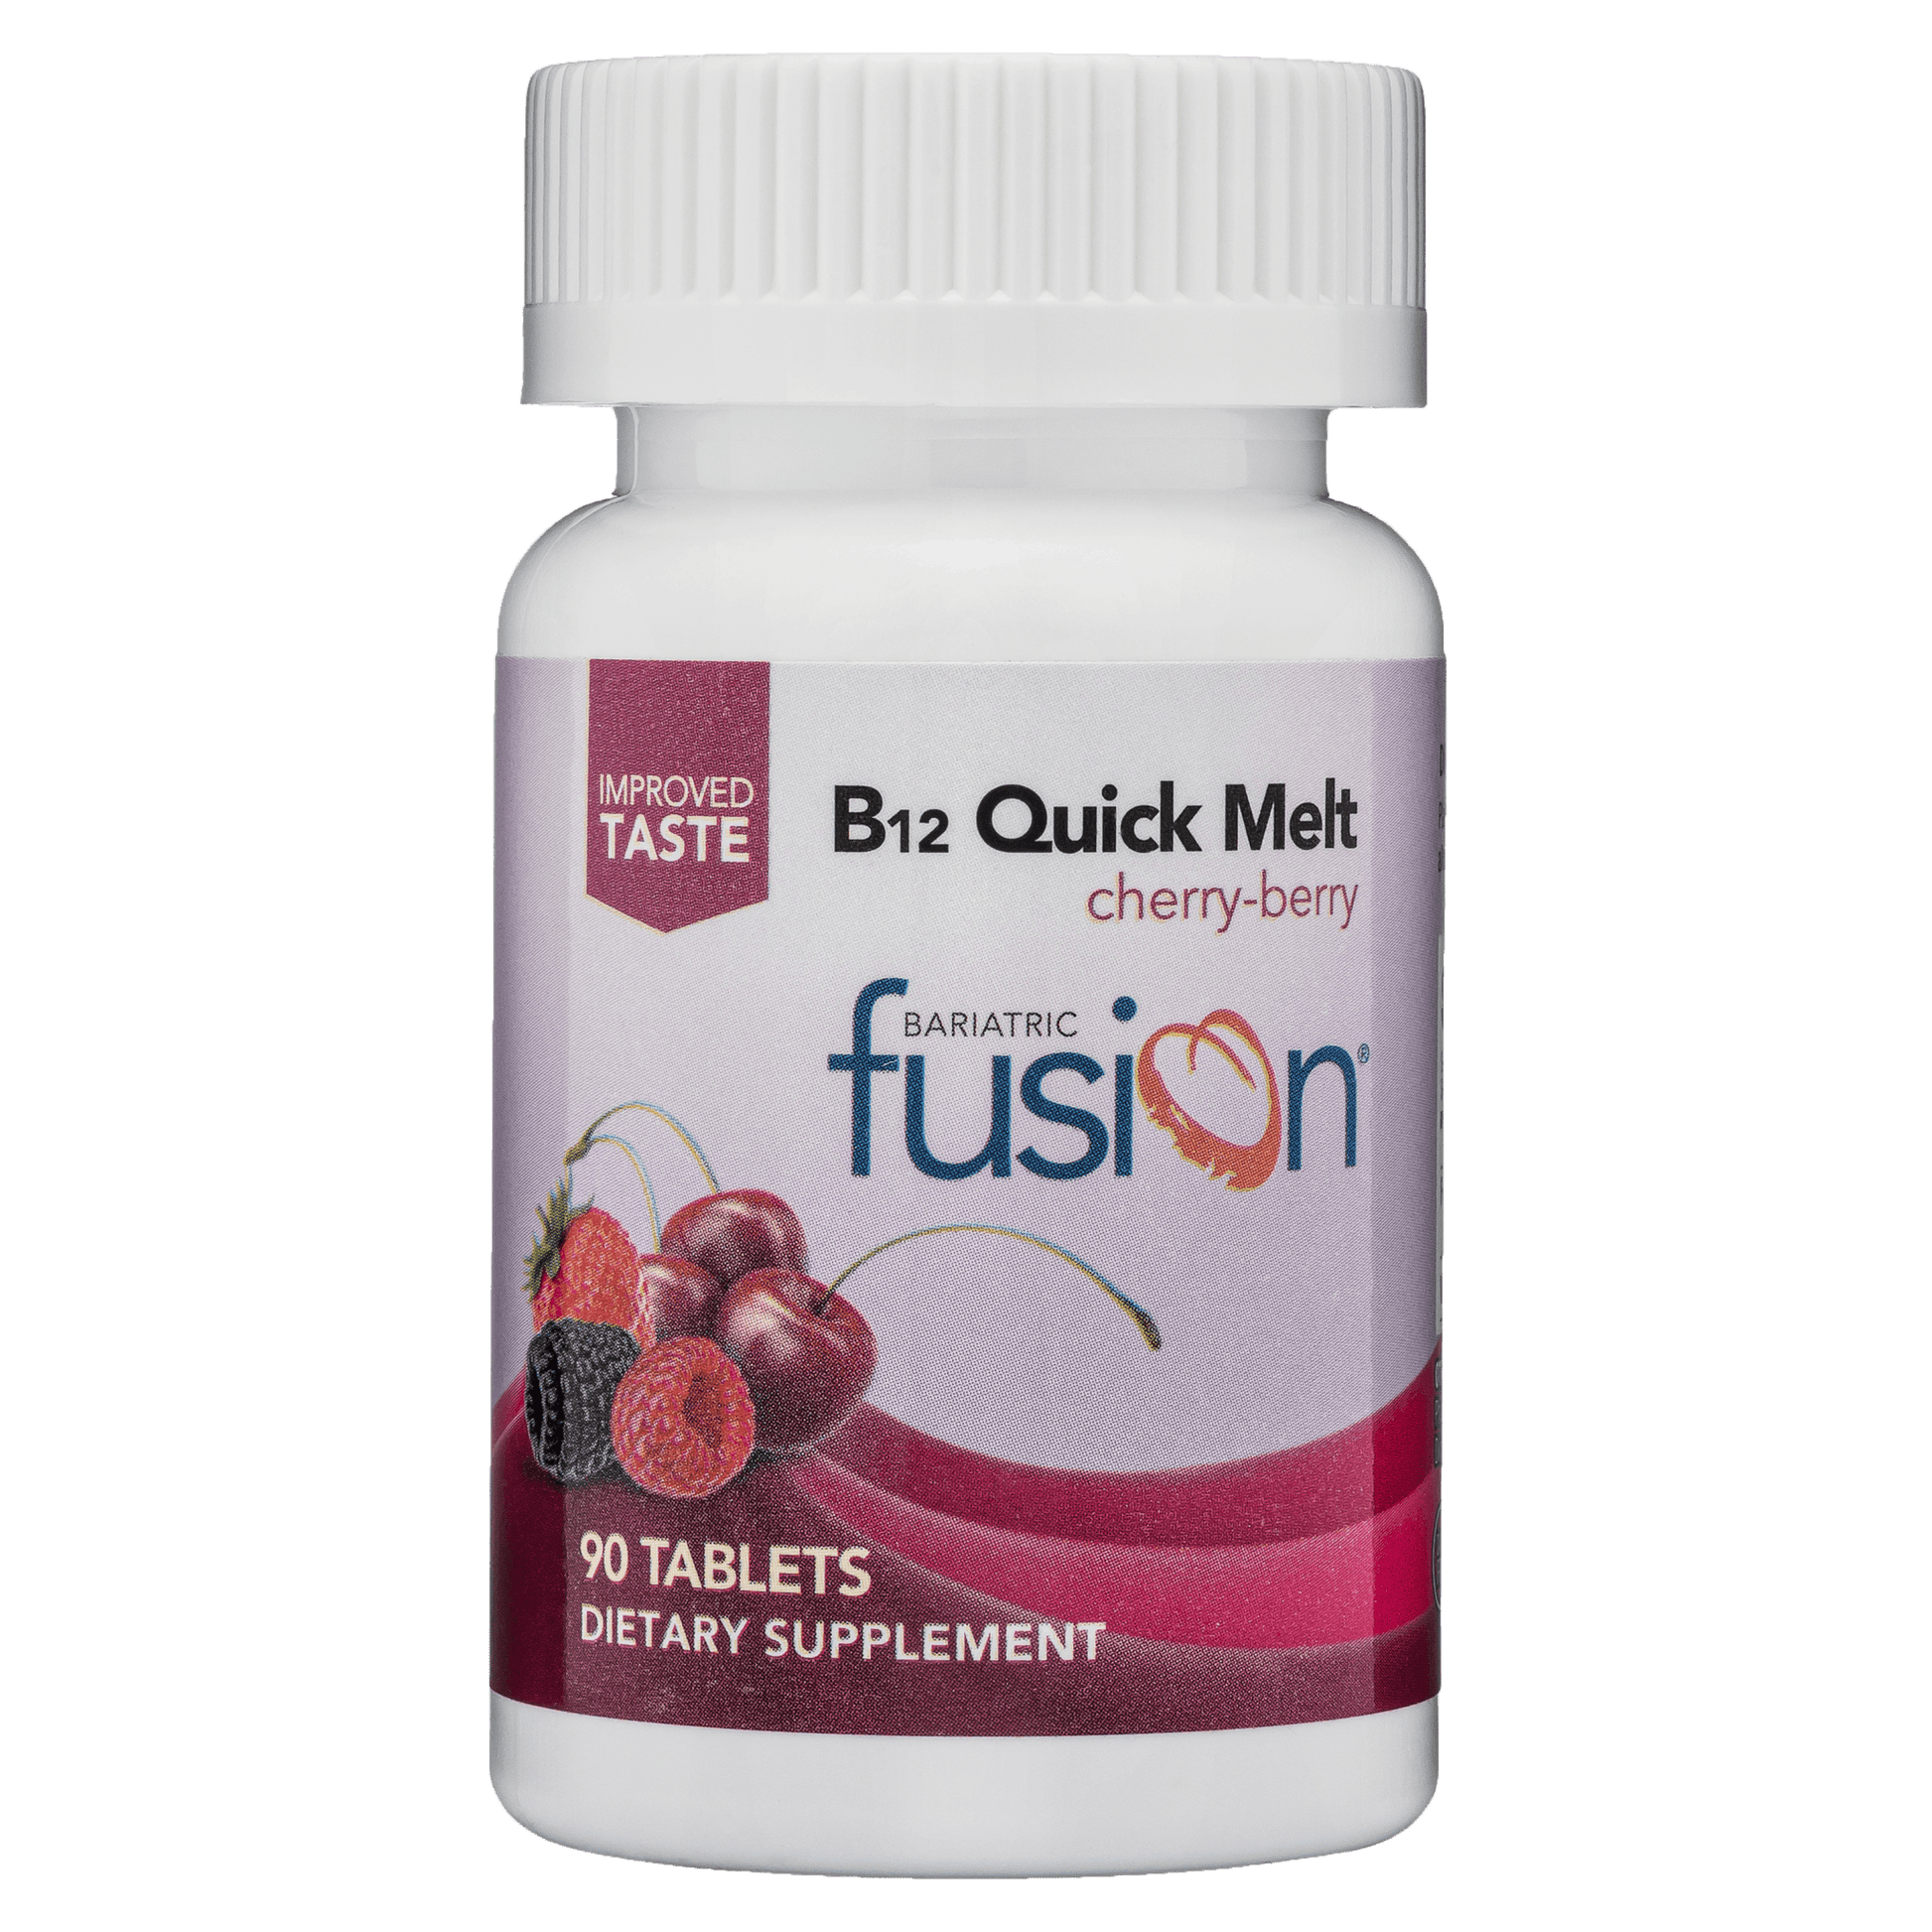 Cherry-Berry Vitamin B12 Quick Melt - Bariatric Fusion